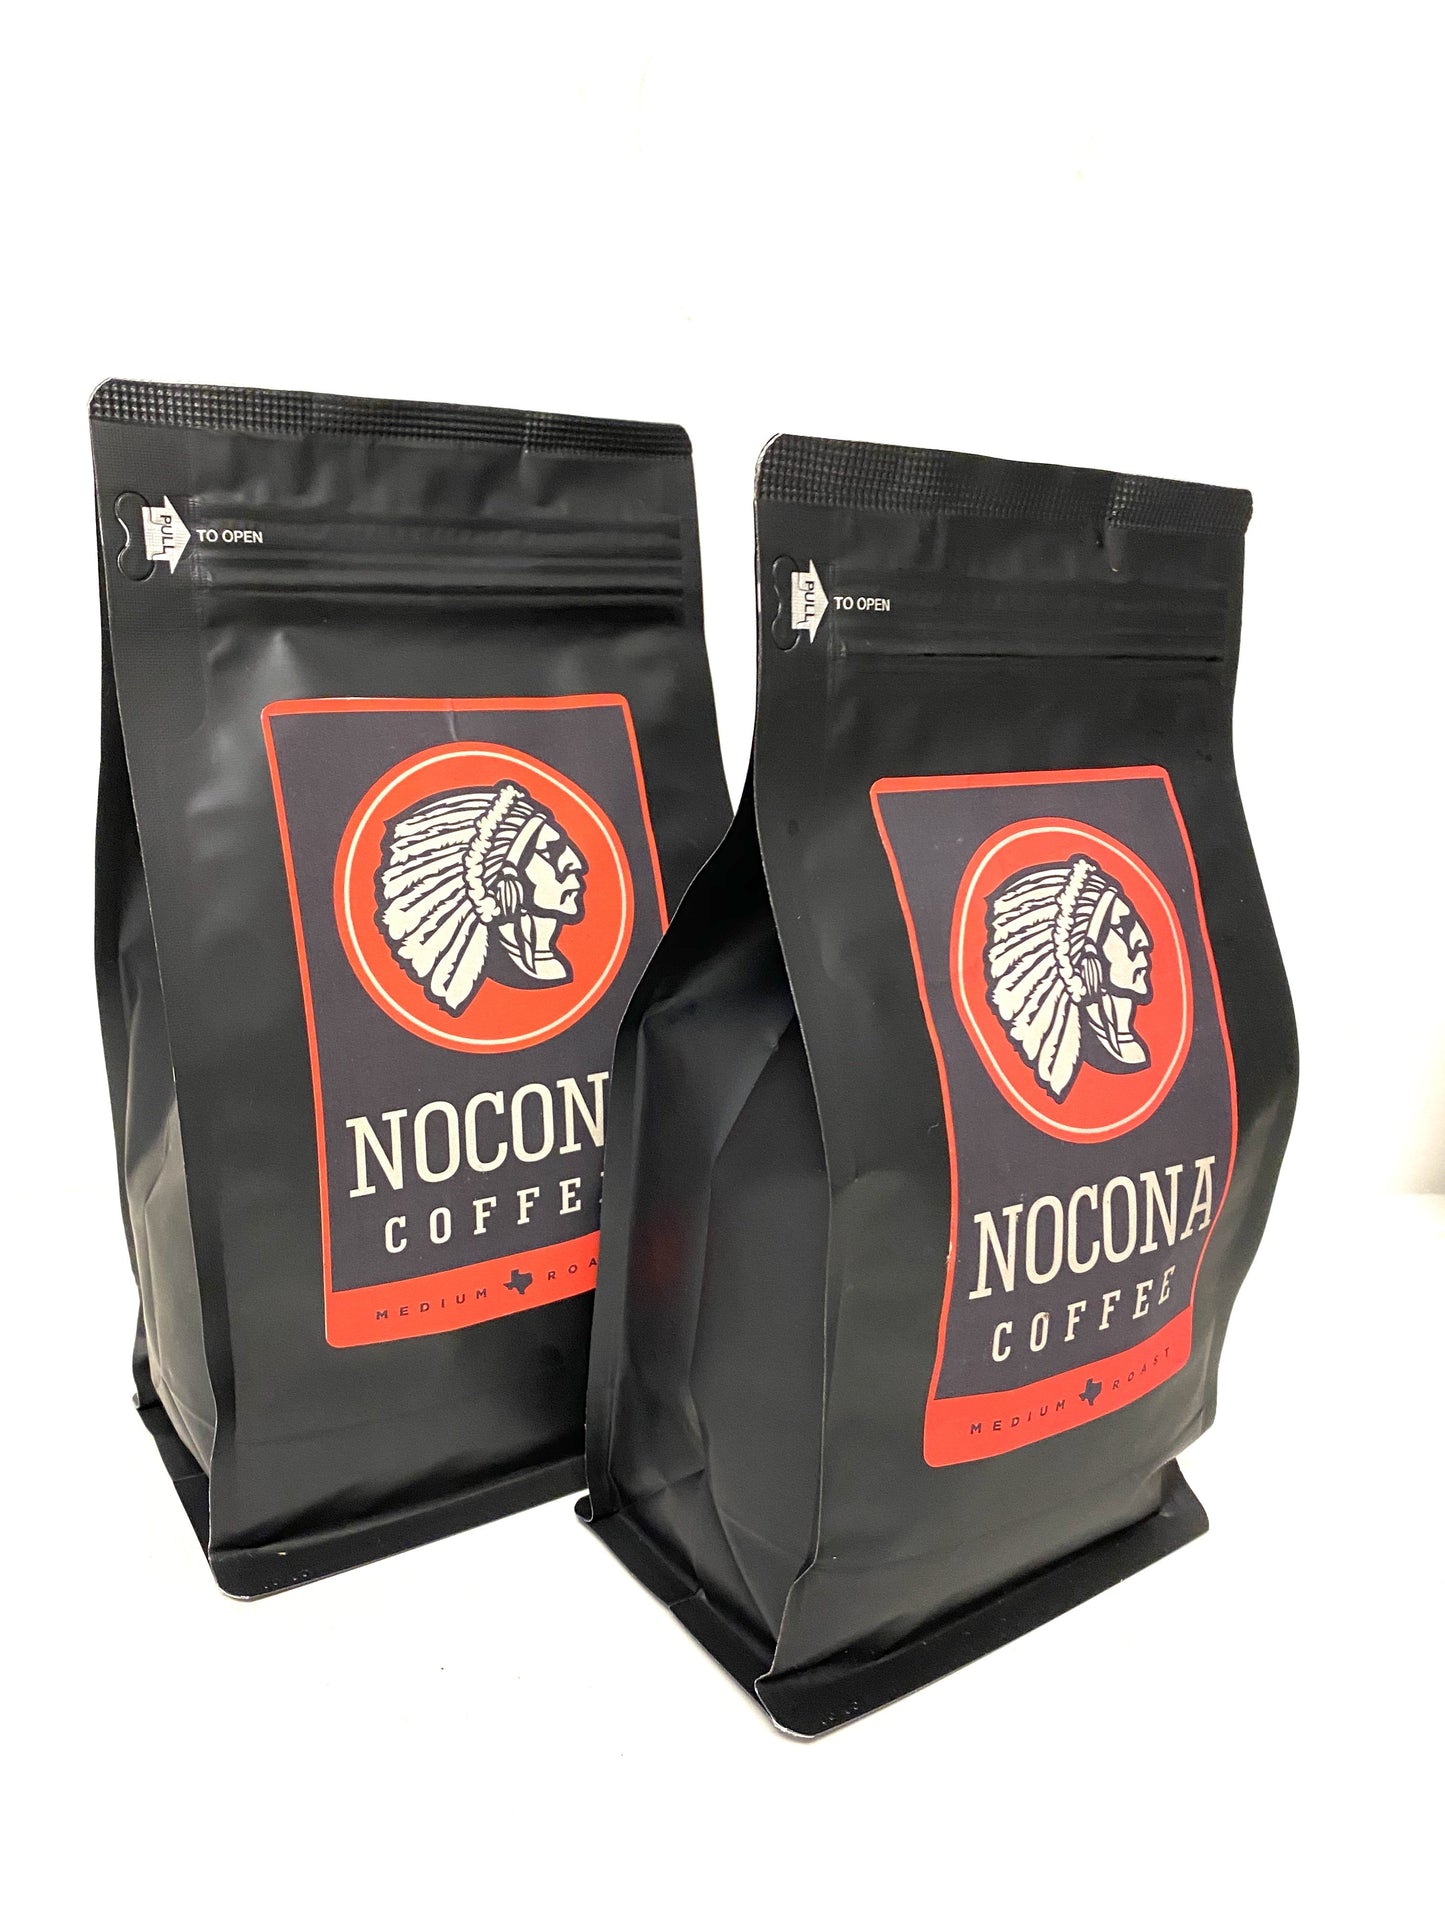 NC1002 Nocona Coffee MEDIUM ROAST 12 oz Bag - WHOLE BEAN